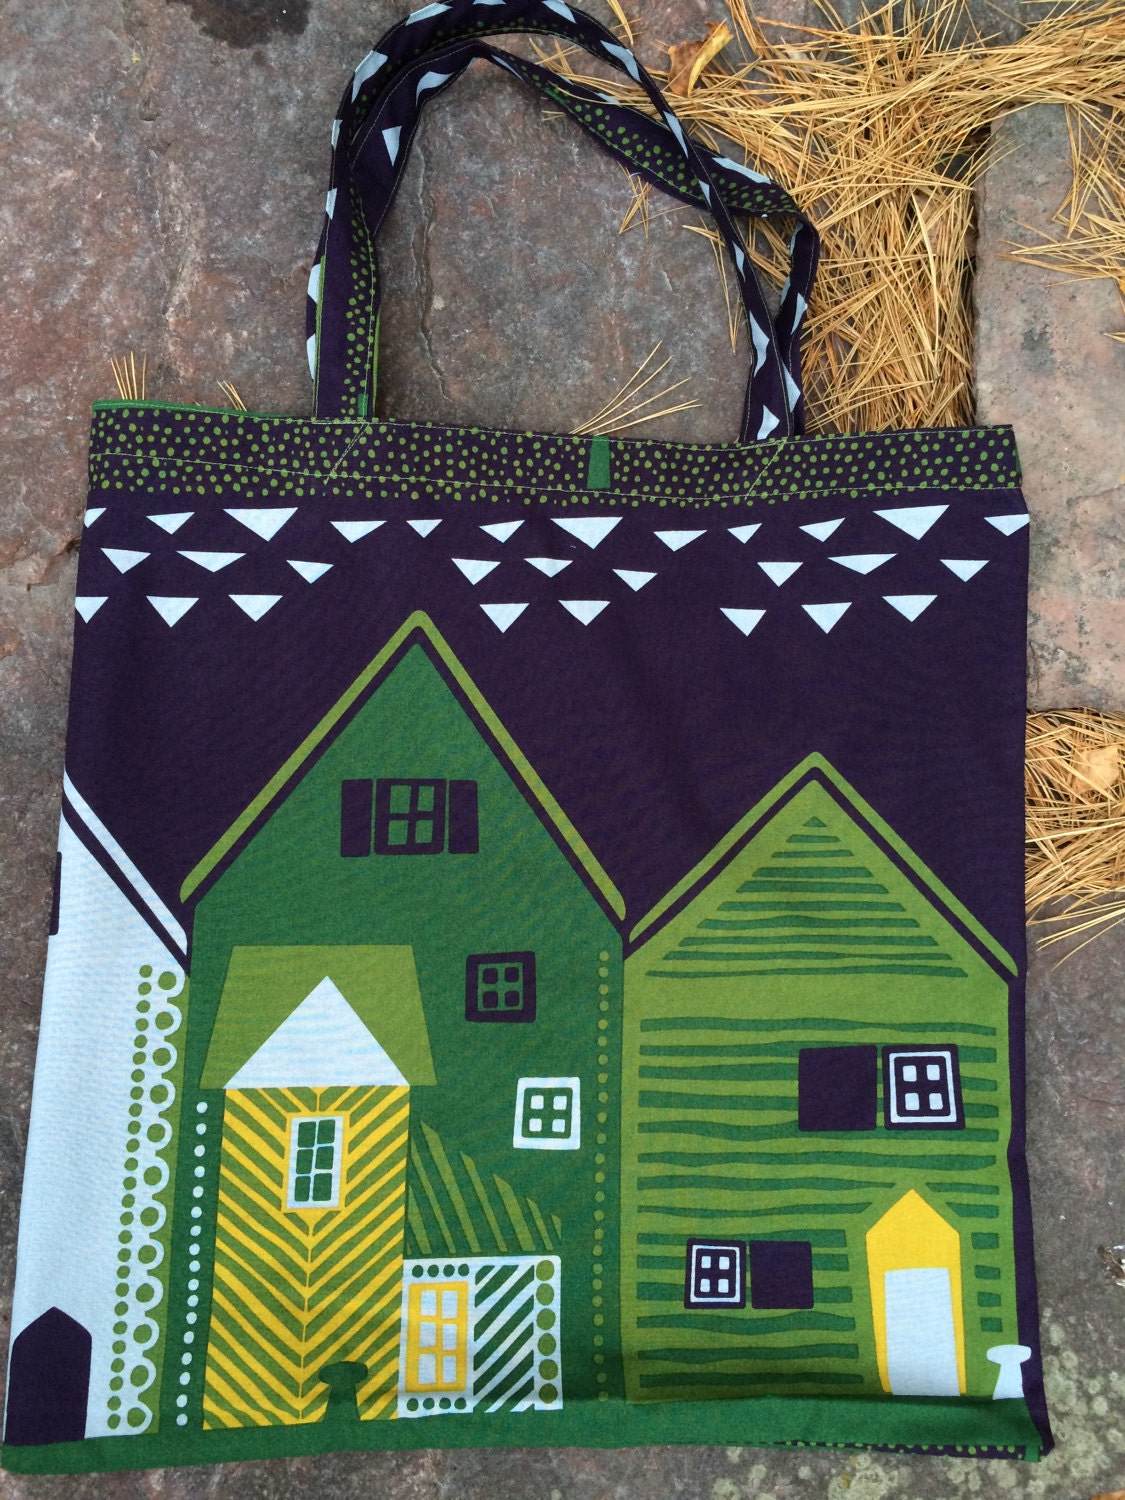 Vanhakaupunki shopping tote bag from Marimekko designer cotton